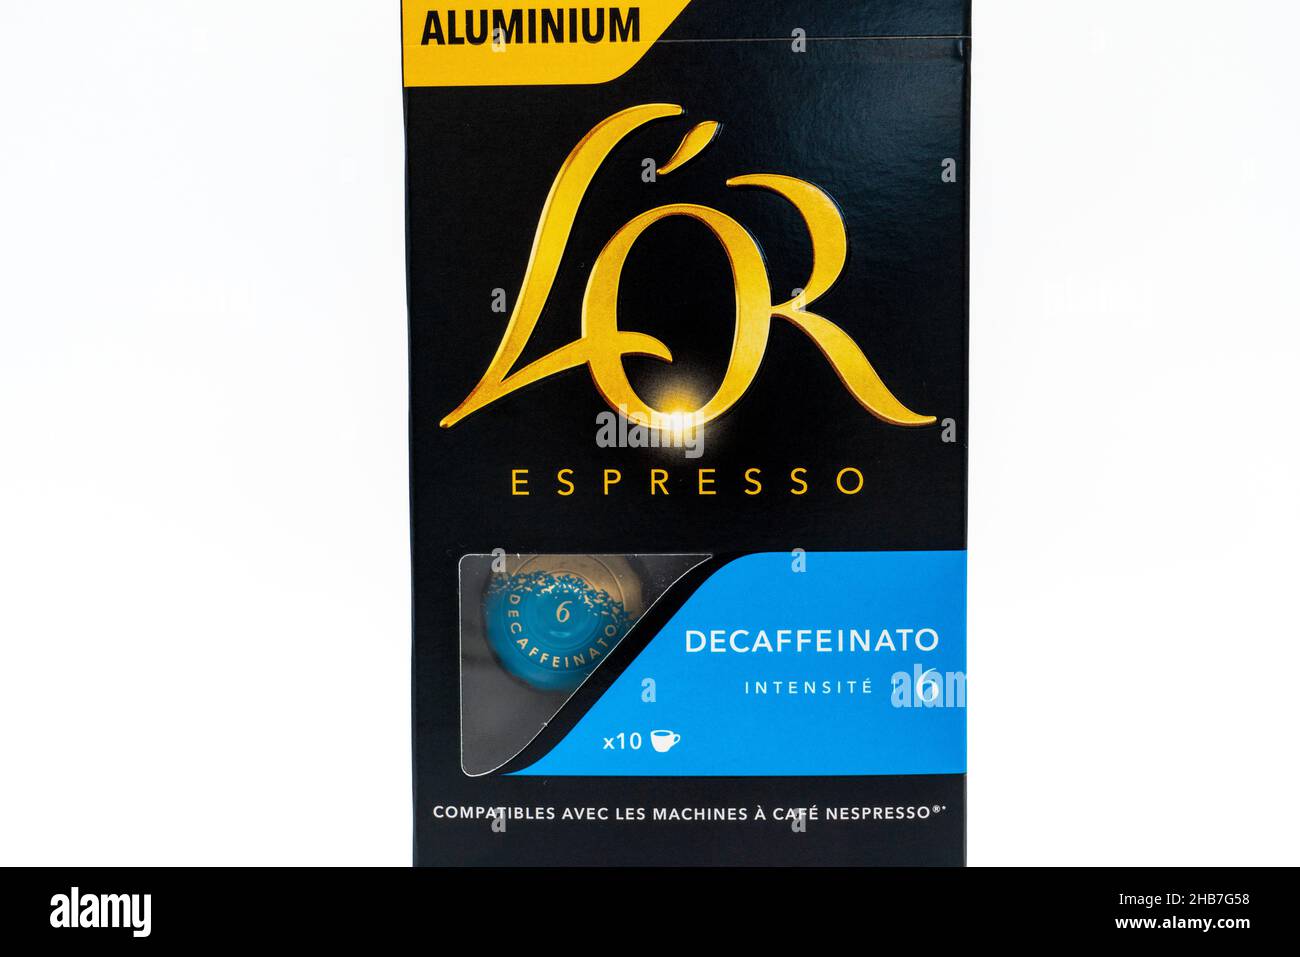 Lloret de Mar, Spain - 12.17.2021: philips l'or capsules for Barista brand coffee machine in box Stock Photo